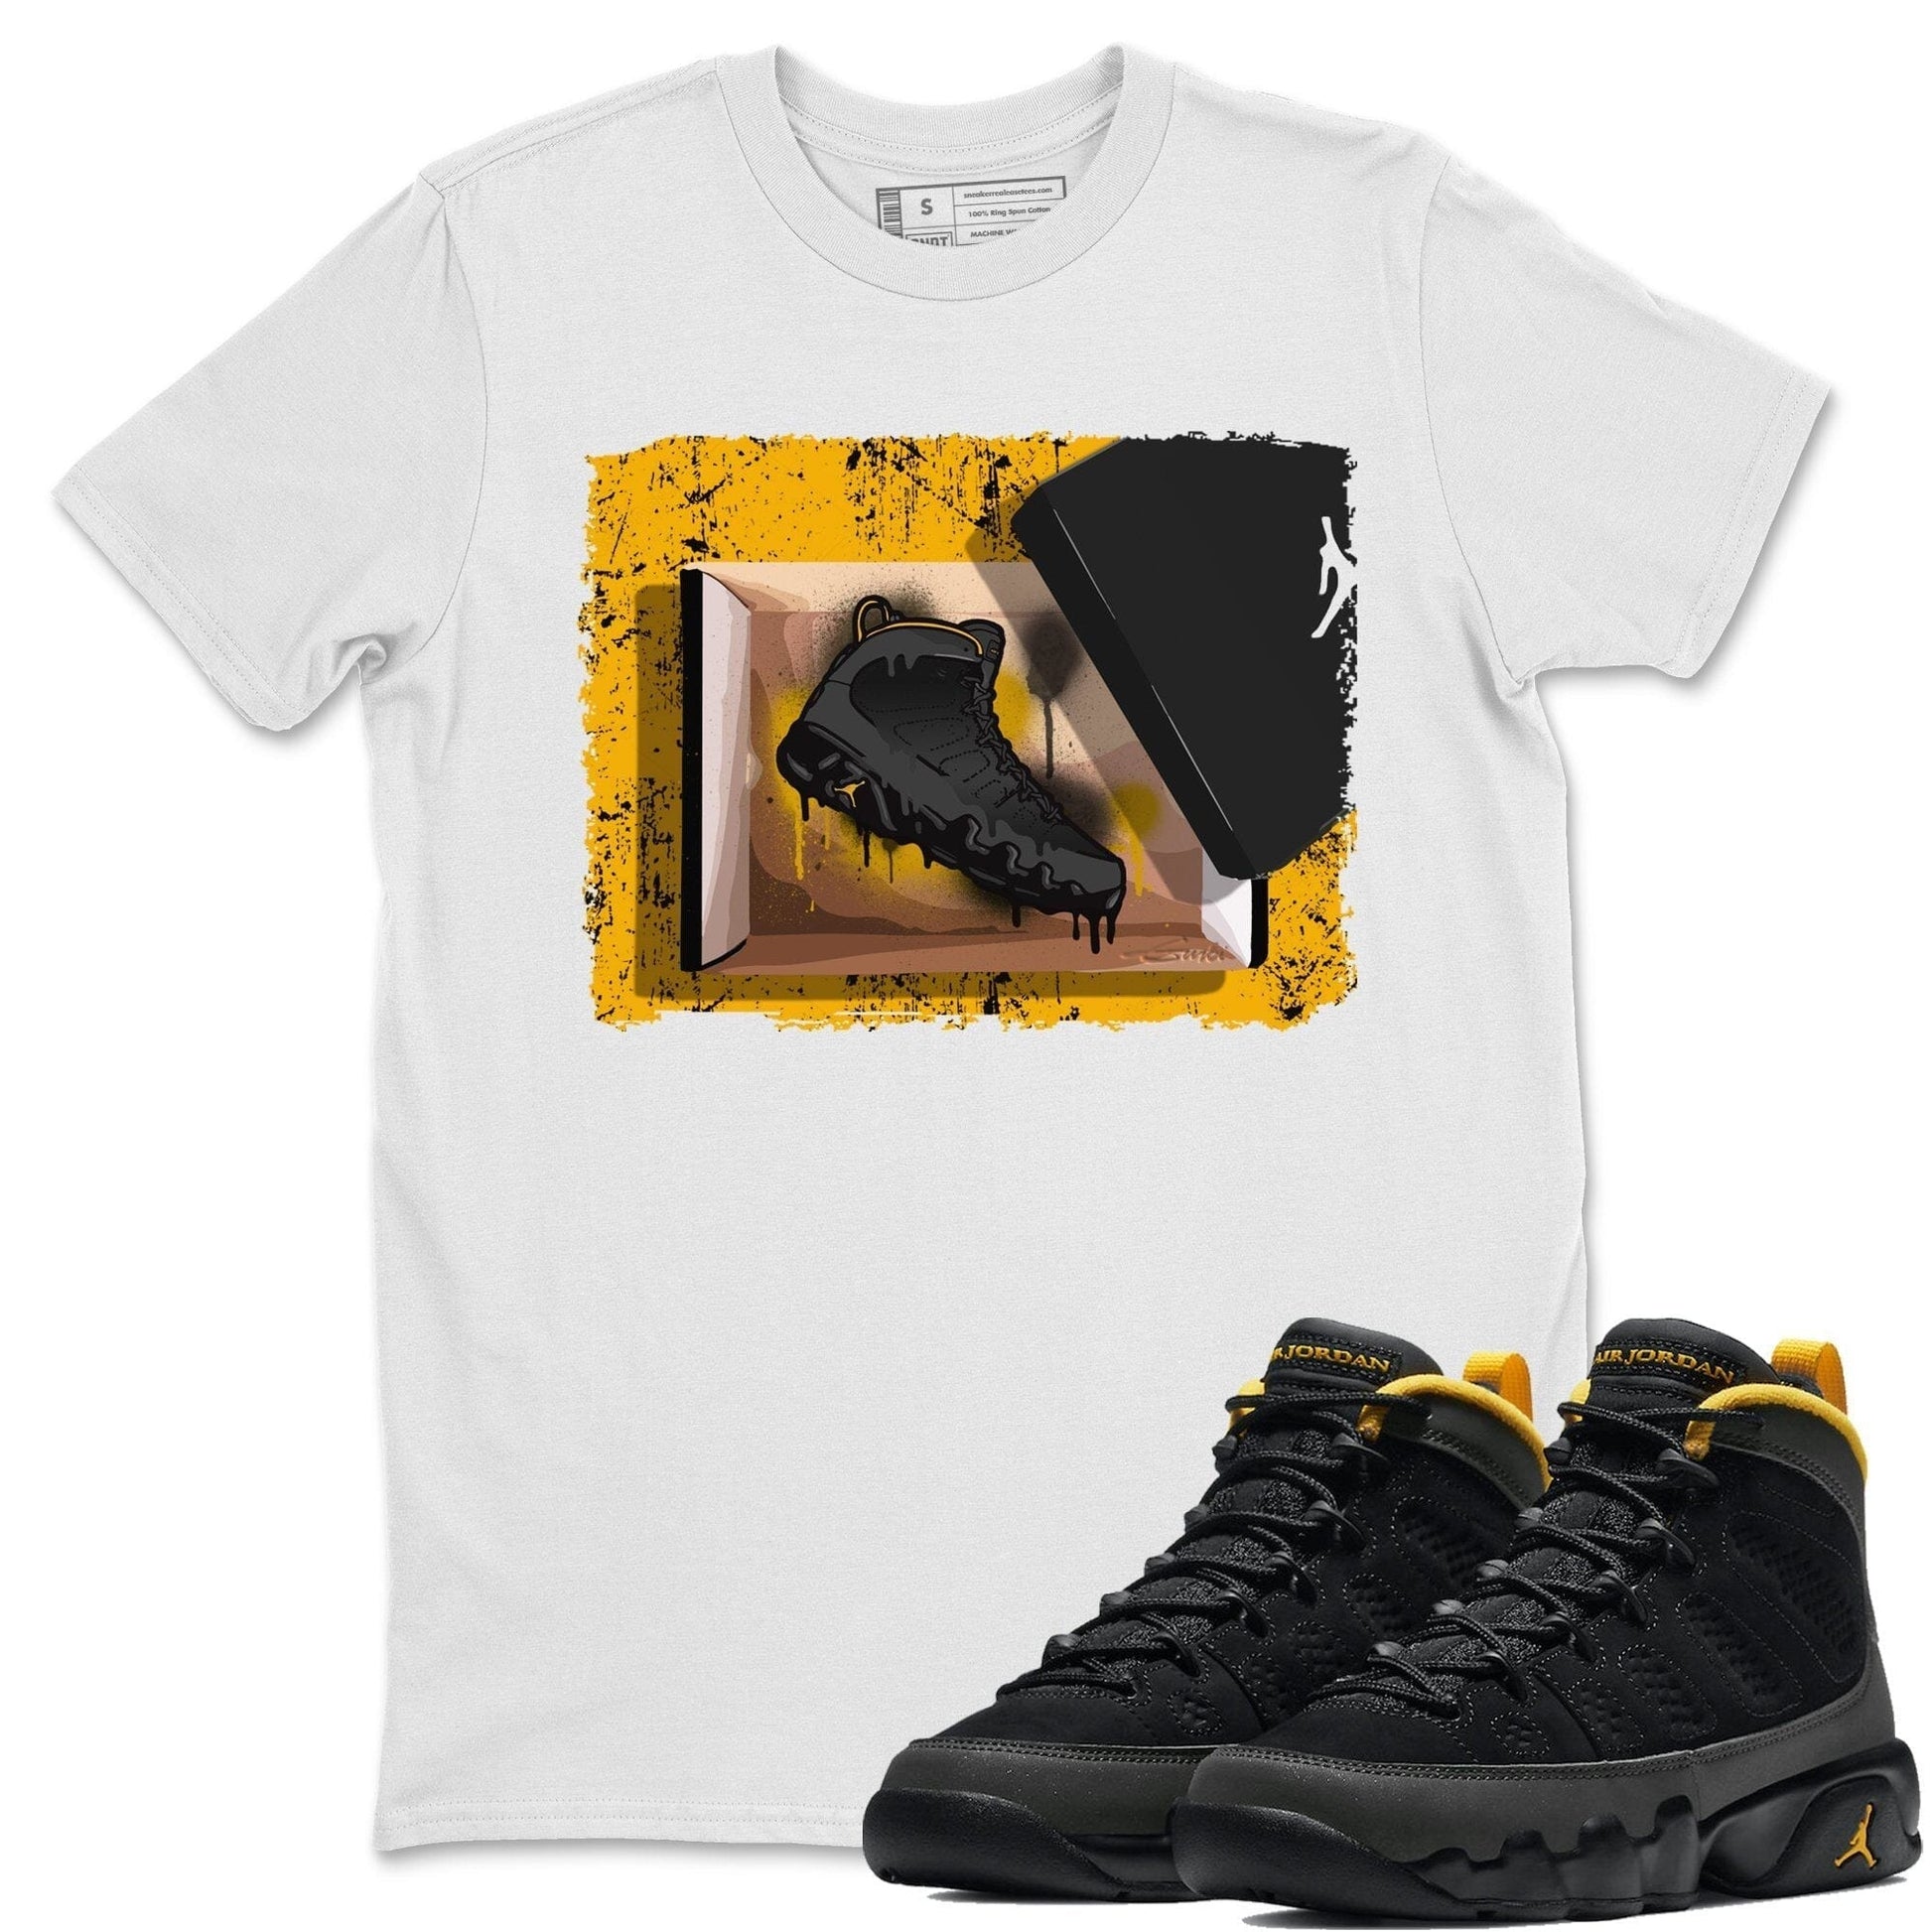 Jordan 9 University Gold, New Kicks Unisex Shirts